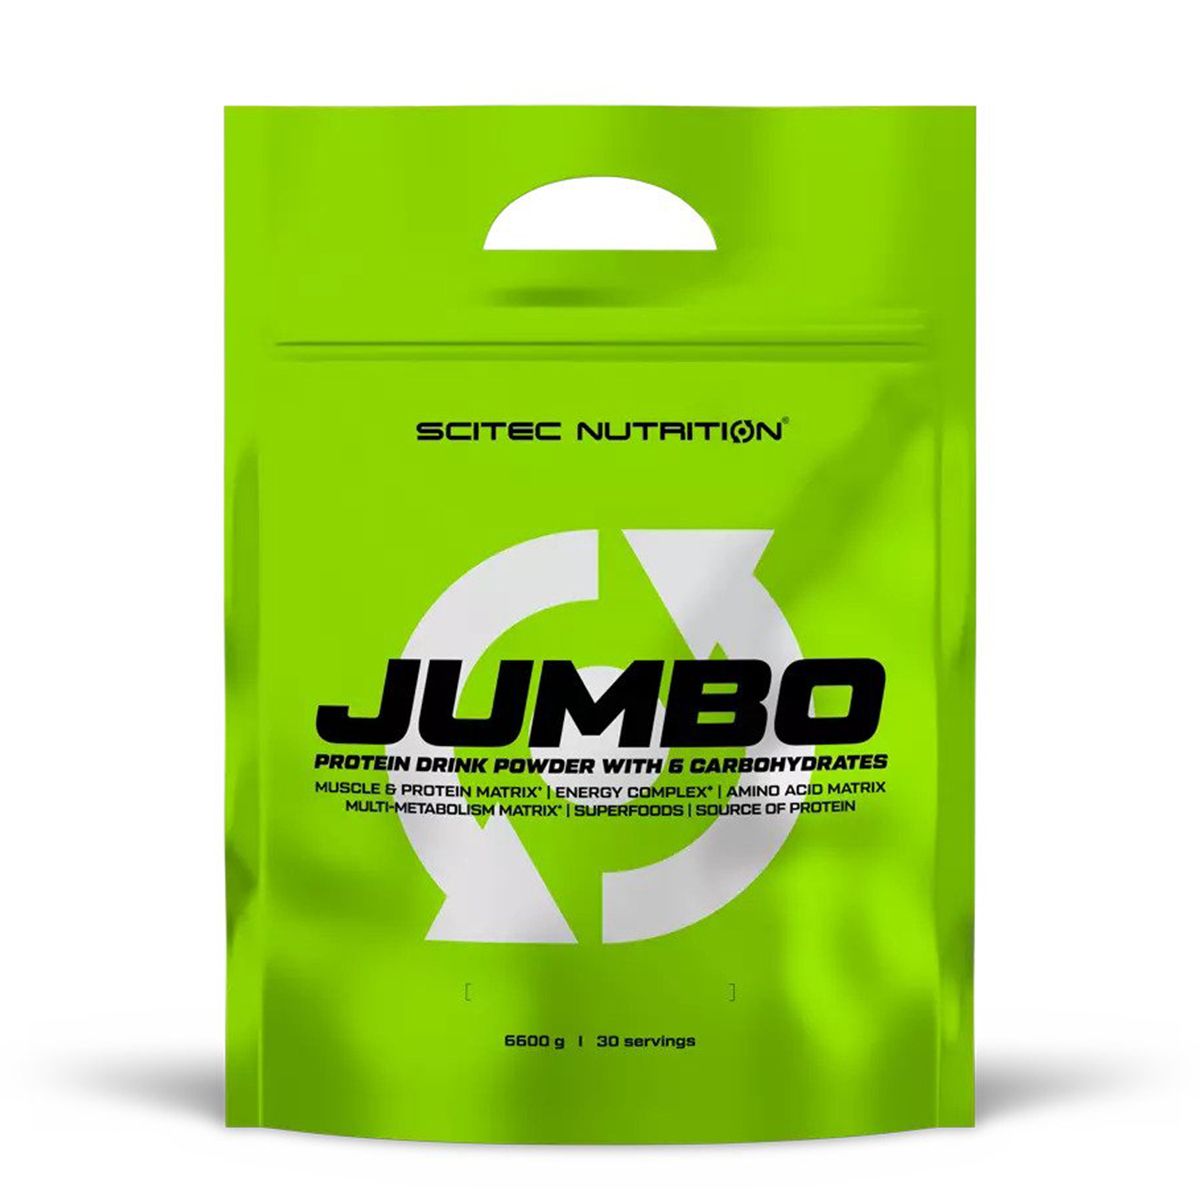 SCITEC NUTRITION - JUMBO - 6,6 KG